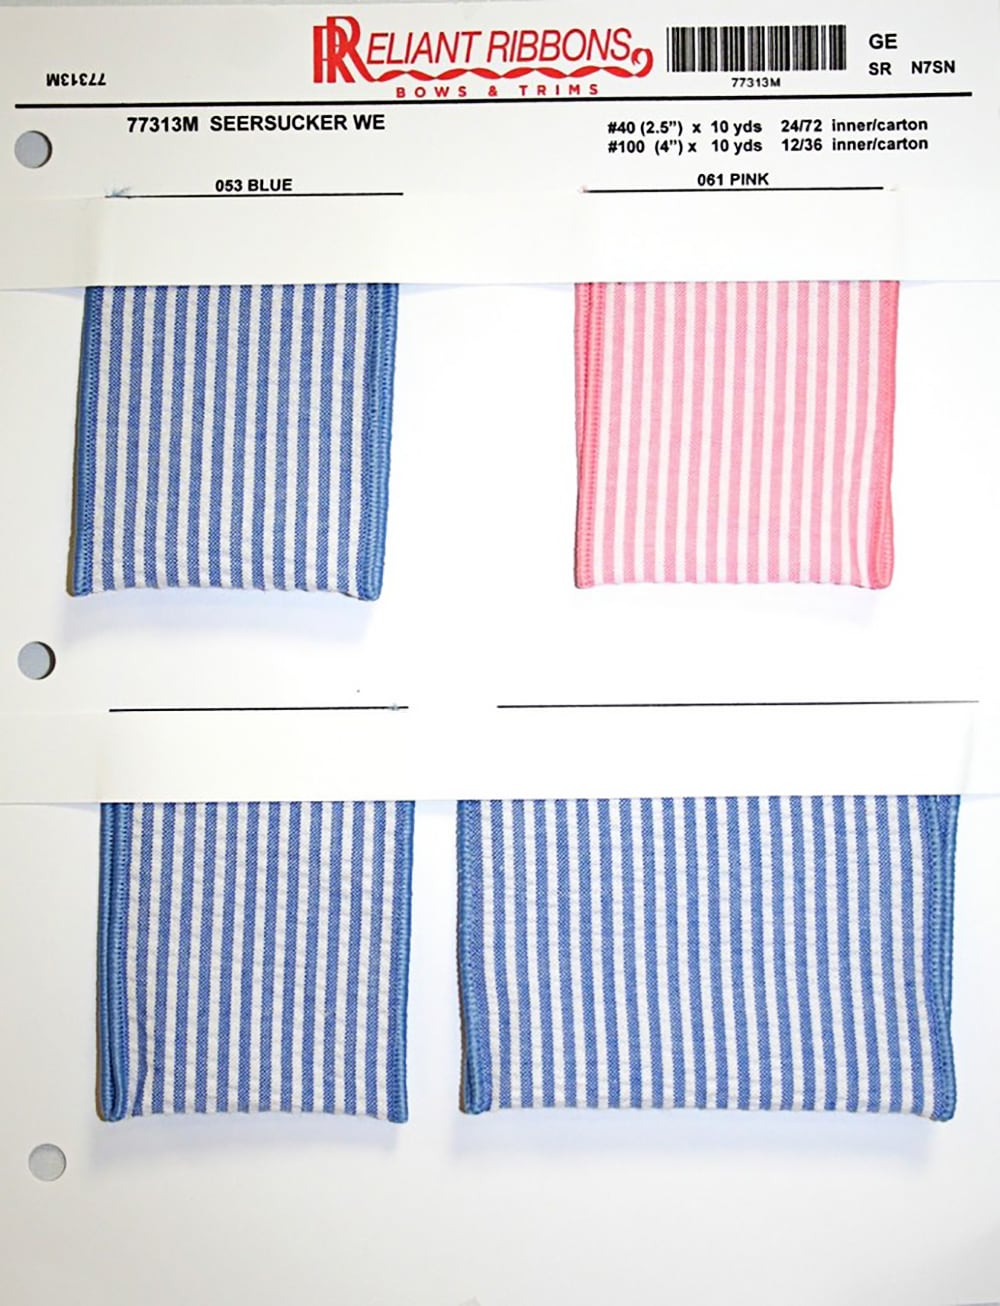 White & Light Blue Ticking Fabric Mesh - 10 Inch x 10 Yards